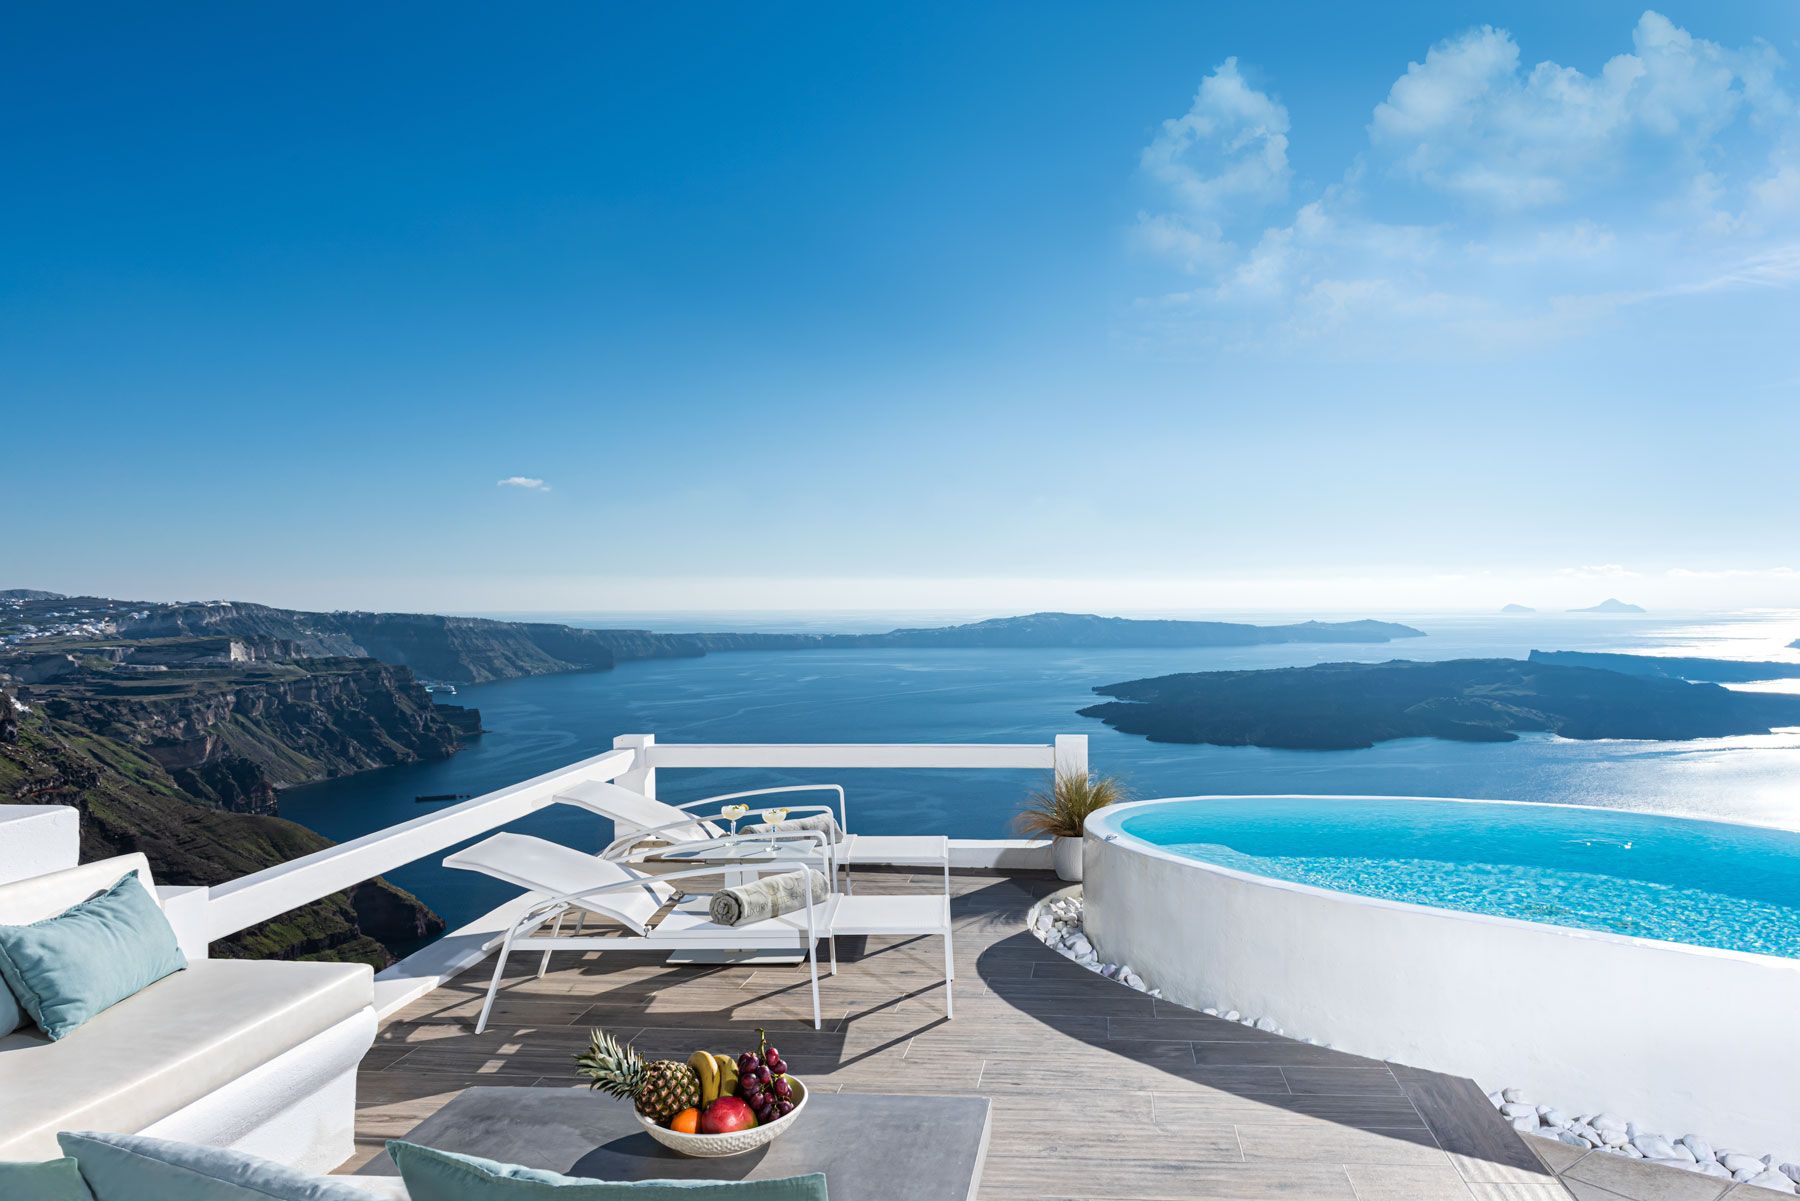 Aqua luxury suites Σουίτες στην Σαντορίνη Ημεροβίγλι, Εσωτερικός & Αρχιτεκτονικός σχεδιασμός πολυτελών σουιτών με ιδιωτική πισίνα